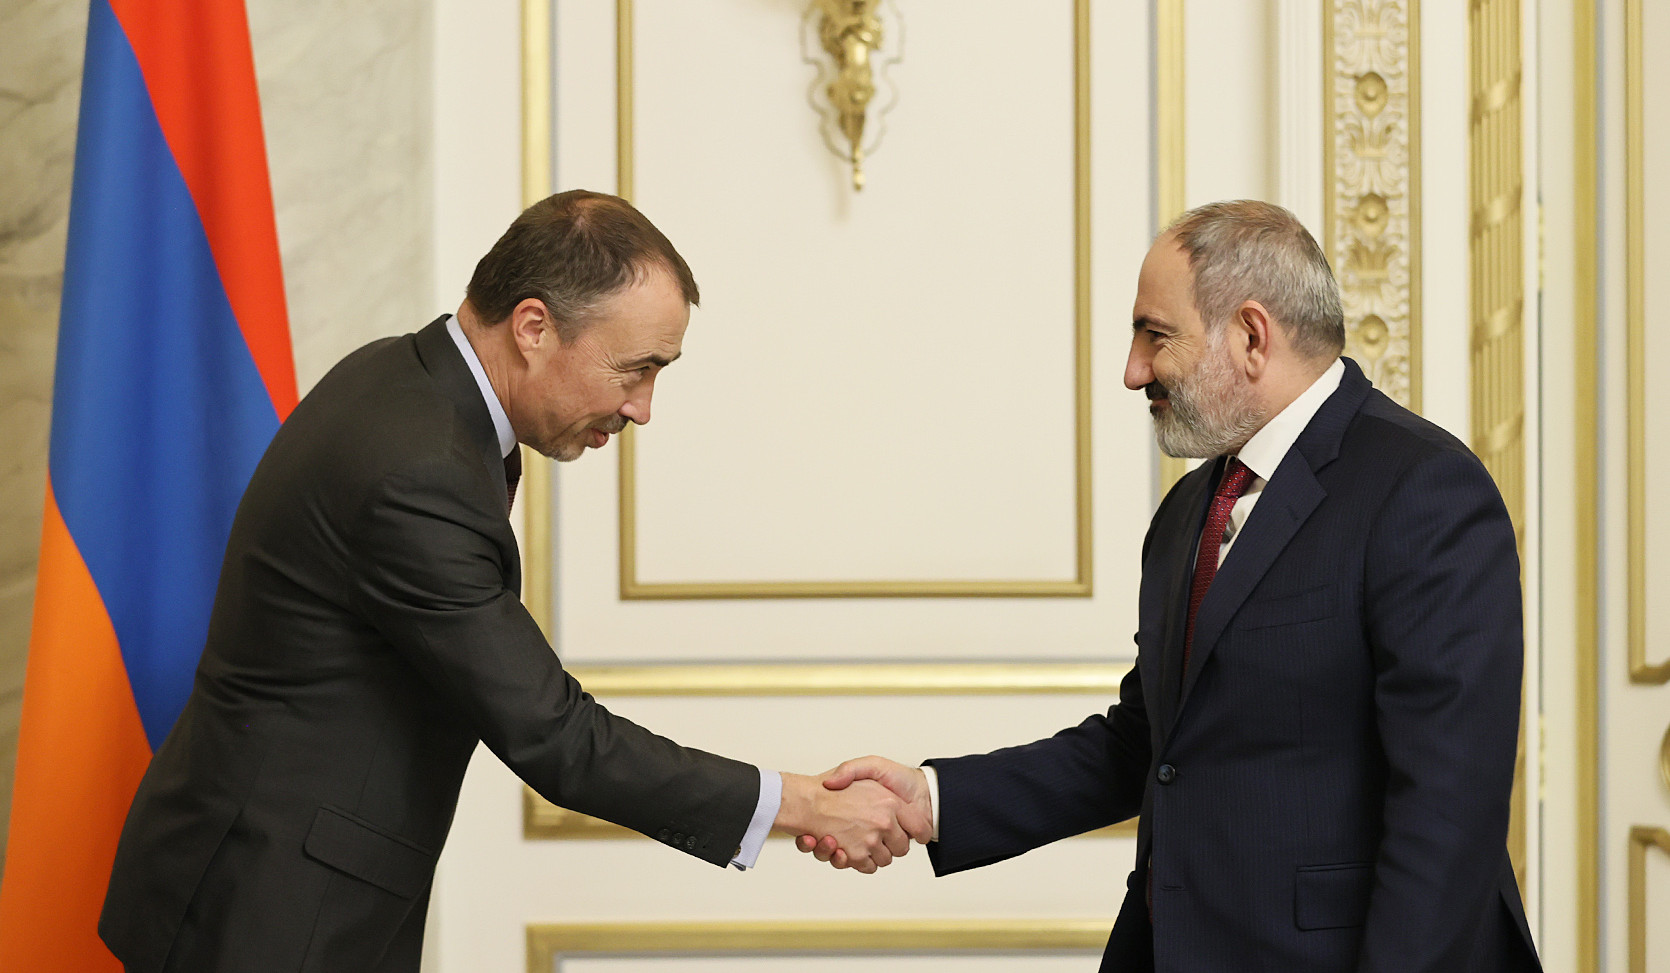 Armenian Prime Minister Pashinyan receives Toivo Klaar